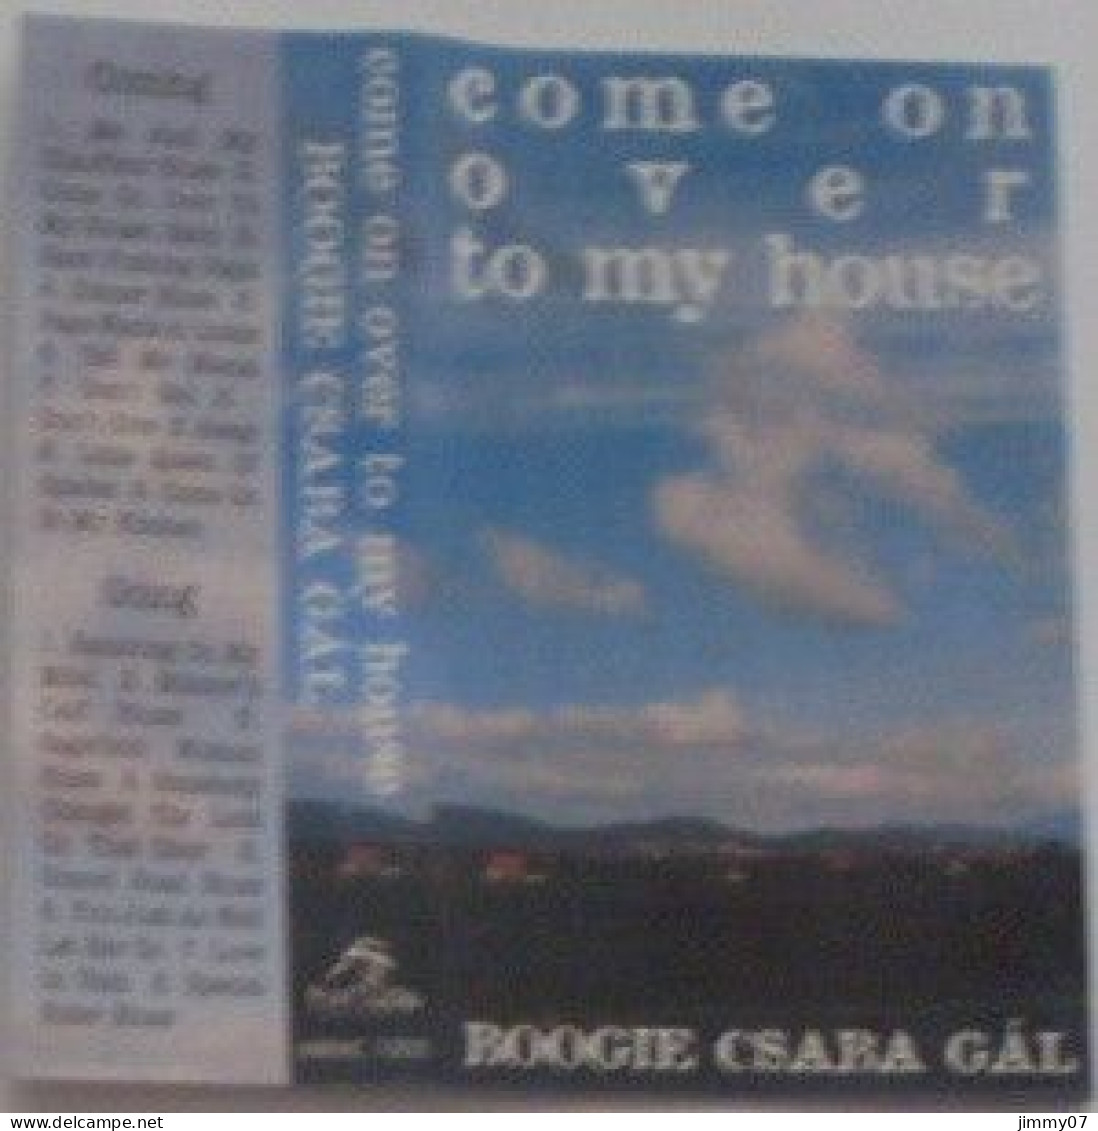 "Boogie" Csaba Gál - Come On Over To My House (Cass, Album) - Cassette